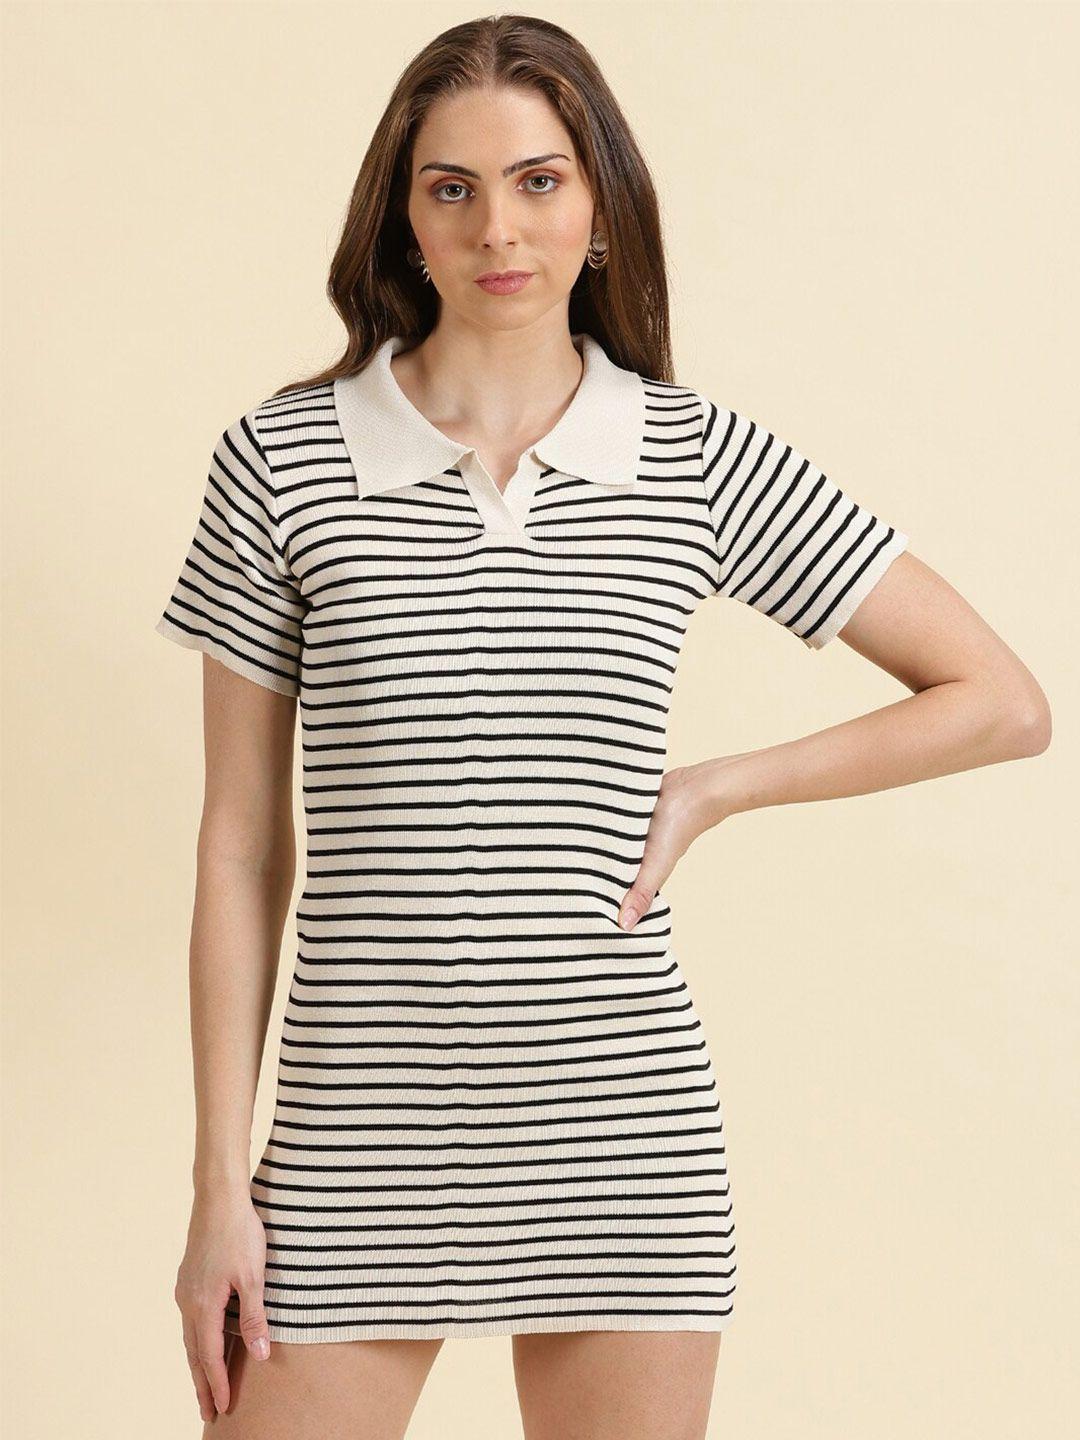 showoff shirt collar striped t-shirt dress